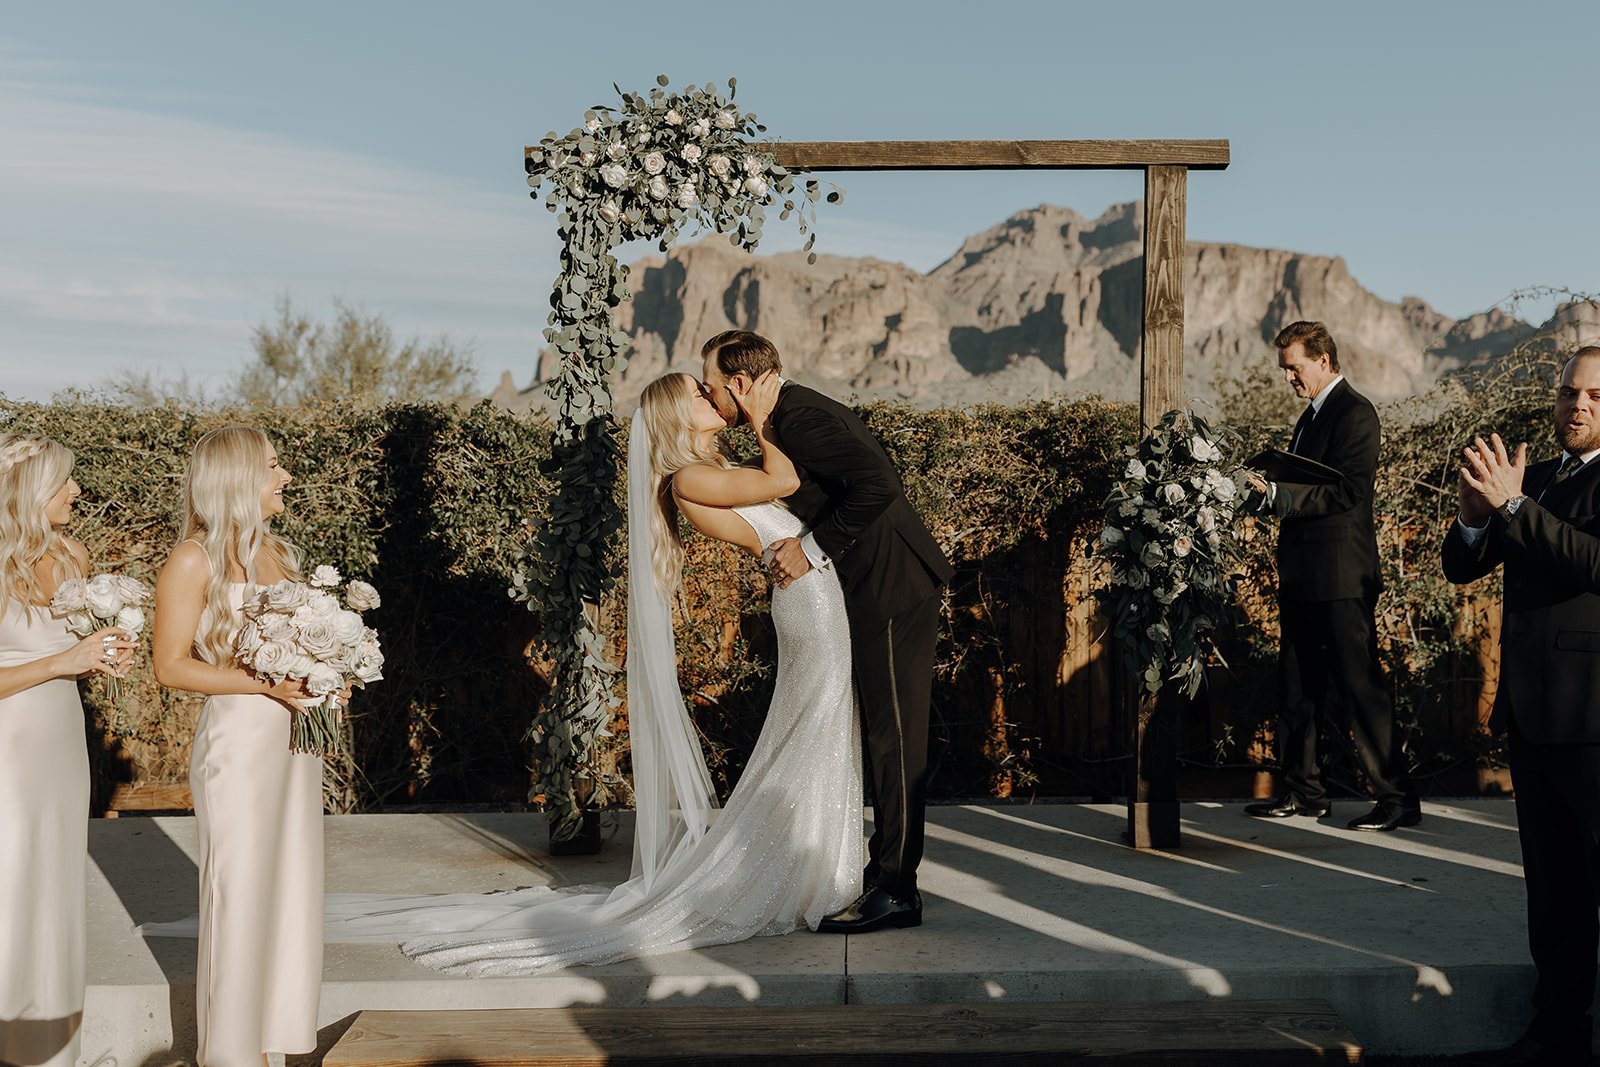 Bride and groom kiss at desert wedding altar